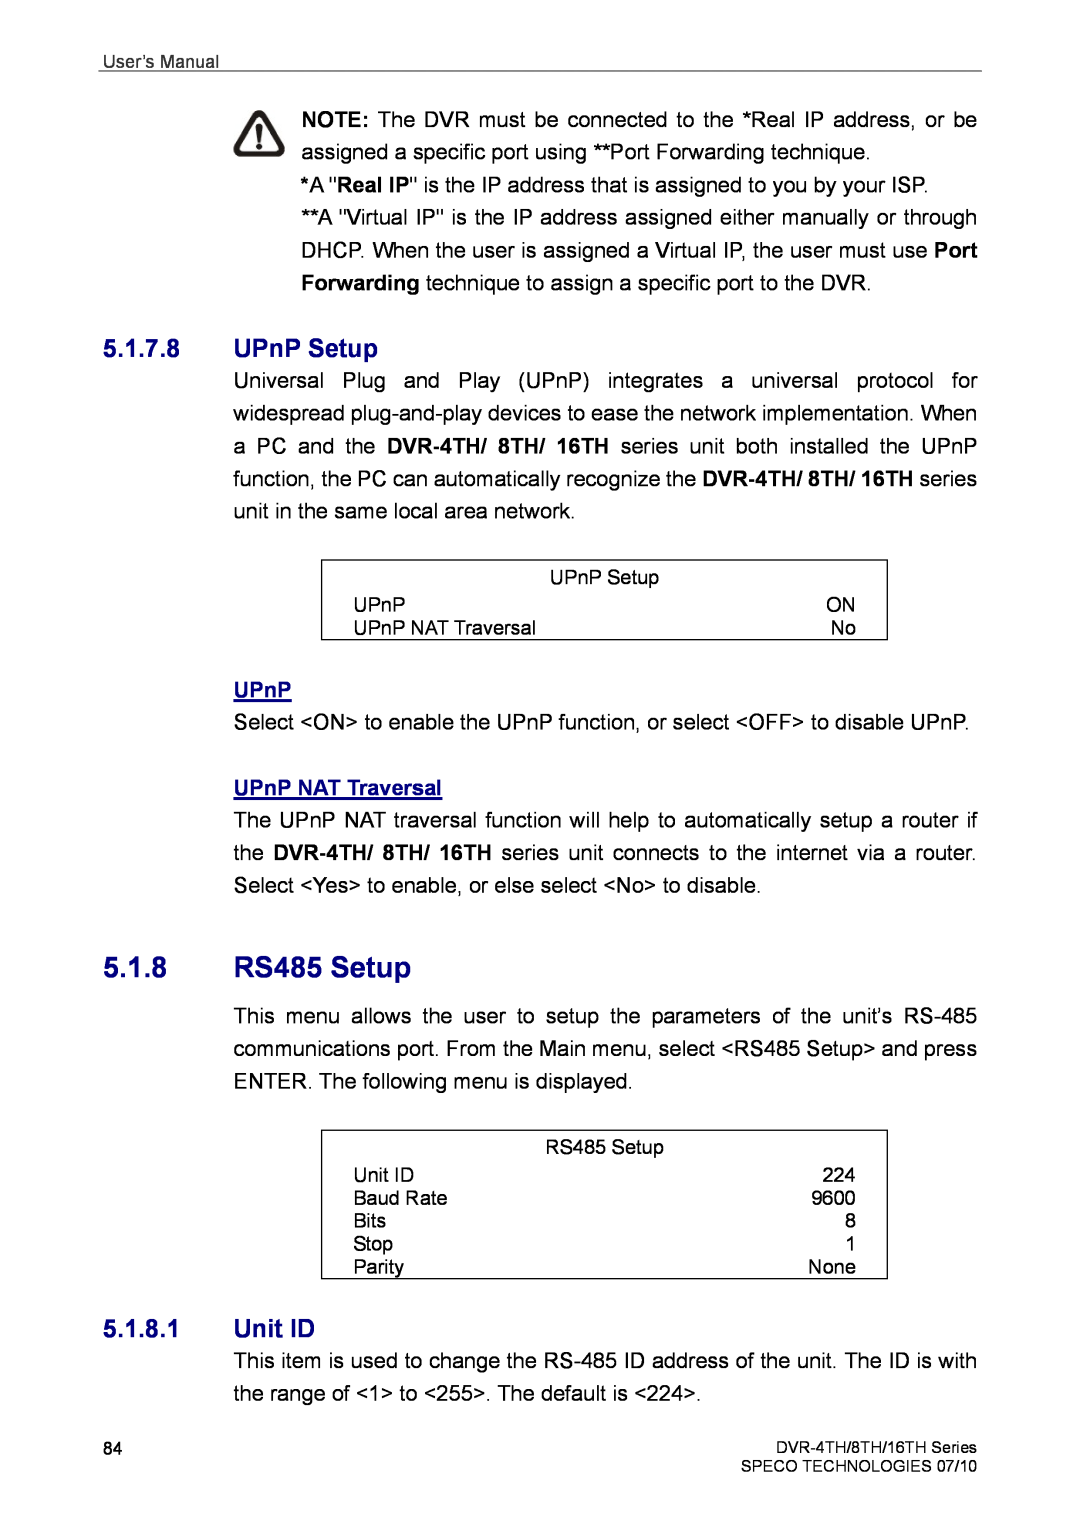 Speco Technologies 4TH, 8TH, 16TH user manual 5.1.8 RS485 Setup, UPnP Setup, Unit ID 